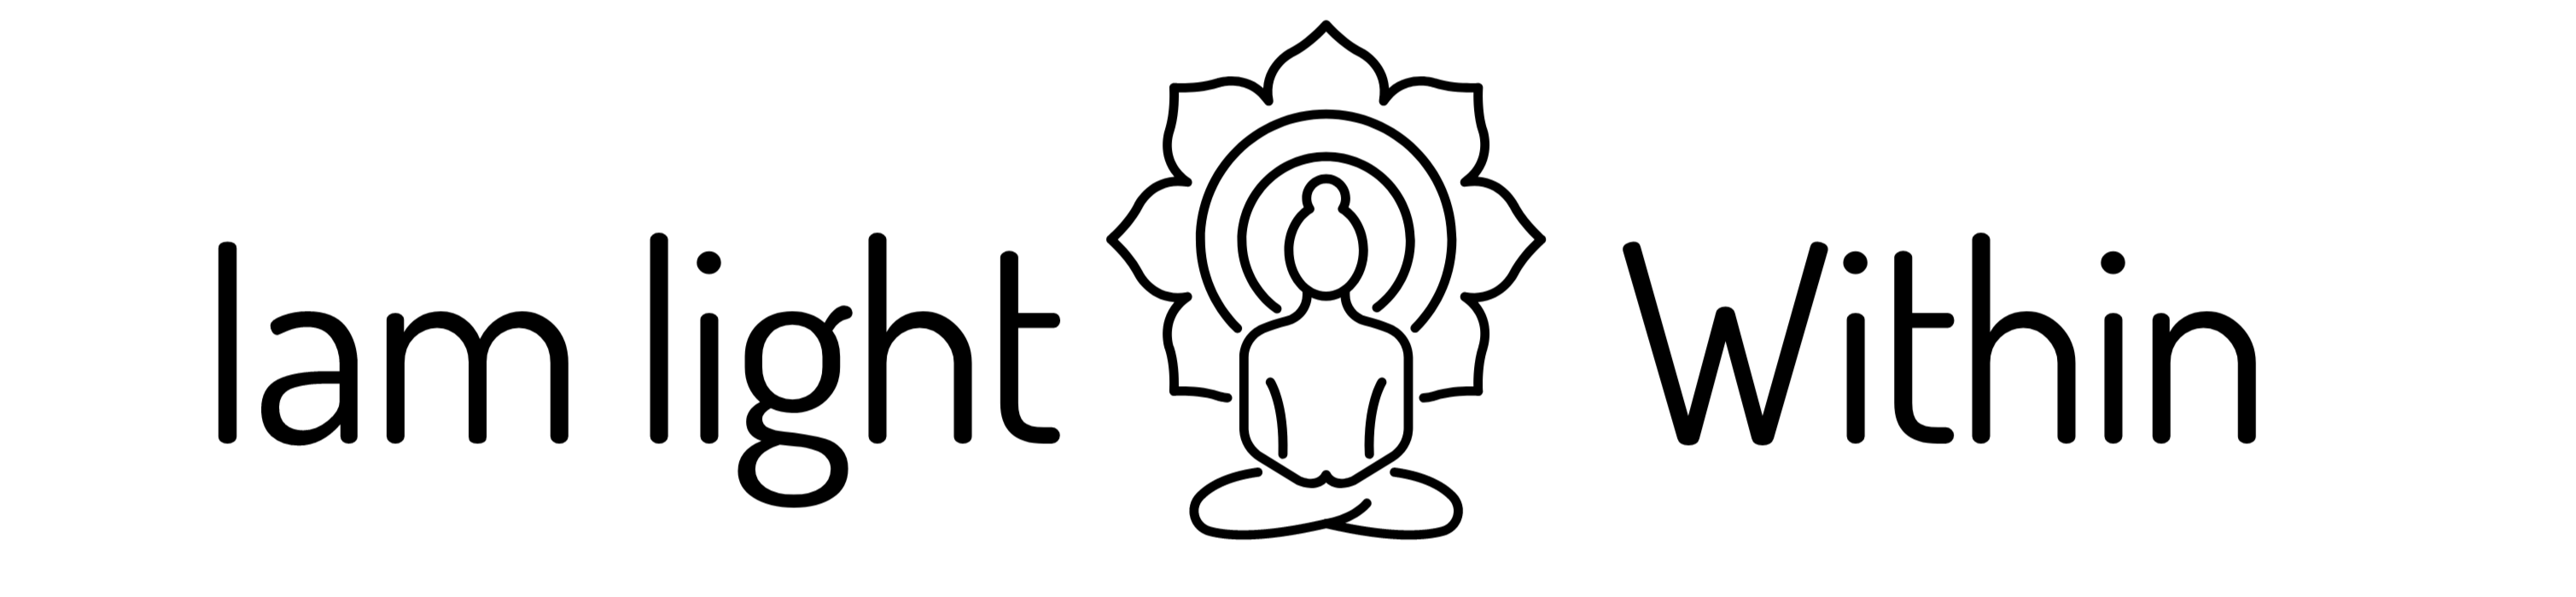 iamlightwithin logo 1